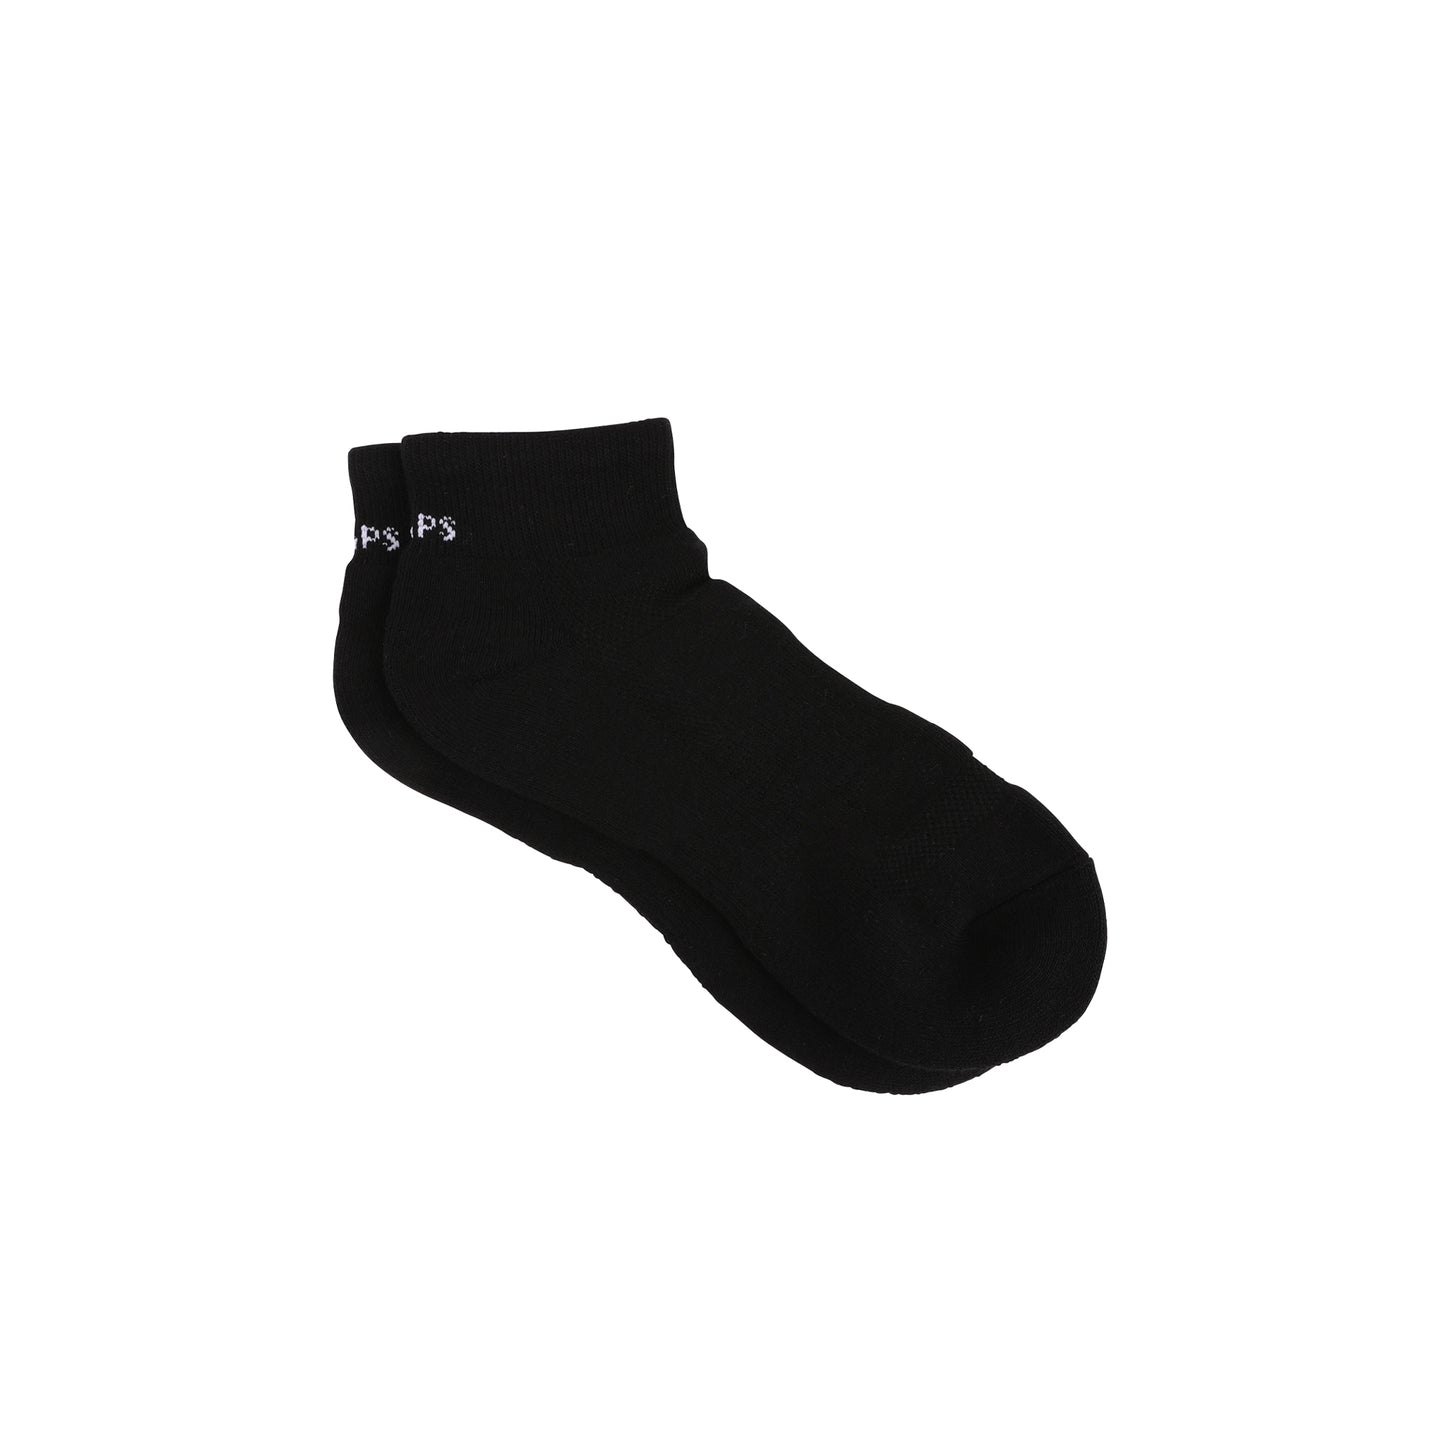 WTAPS Skivvies Ankle Socks Black